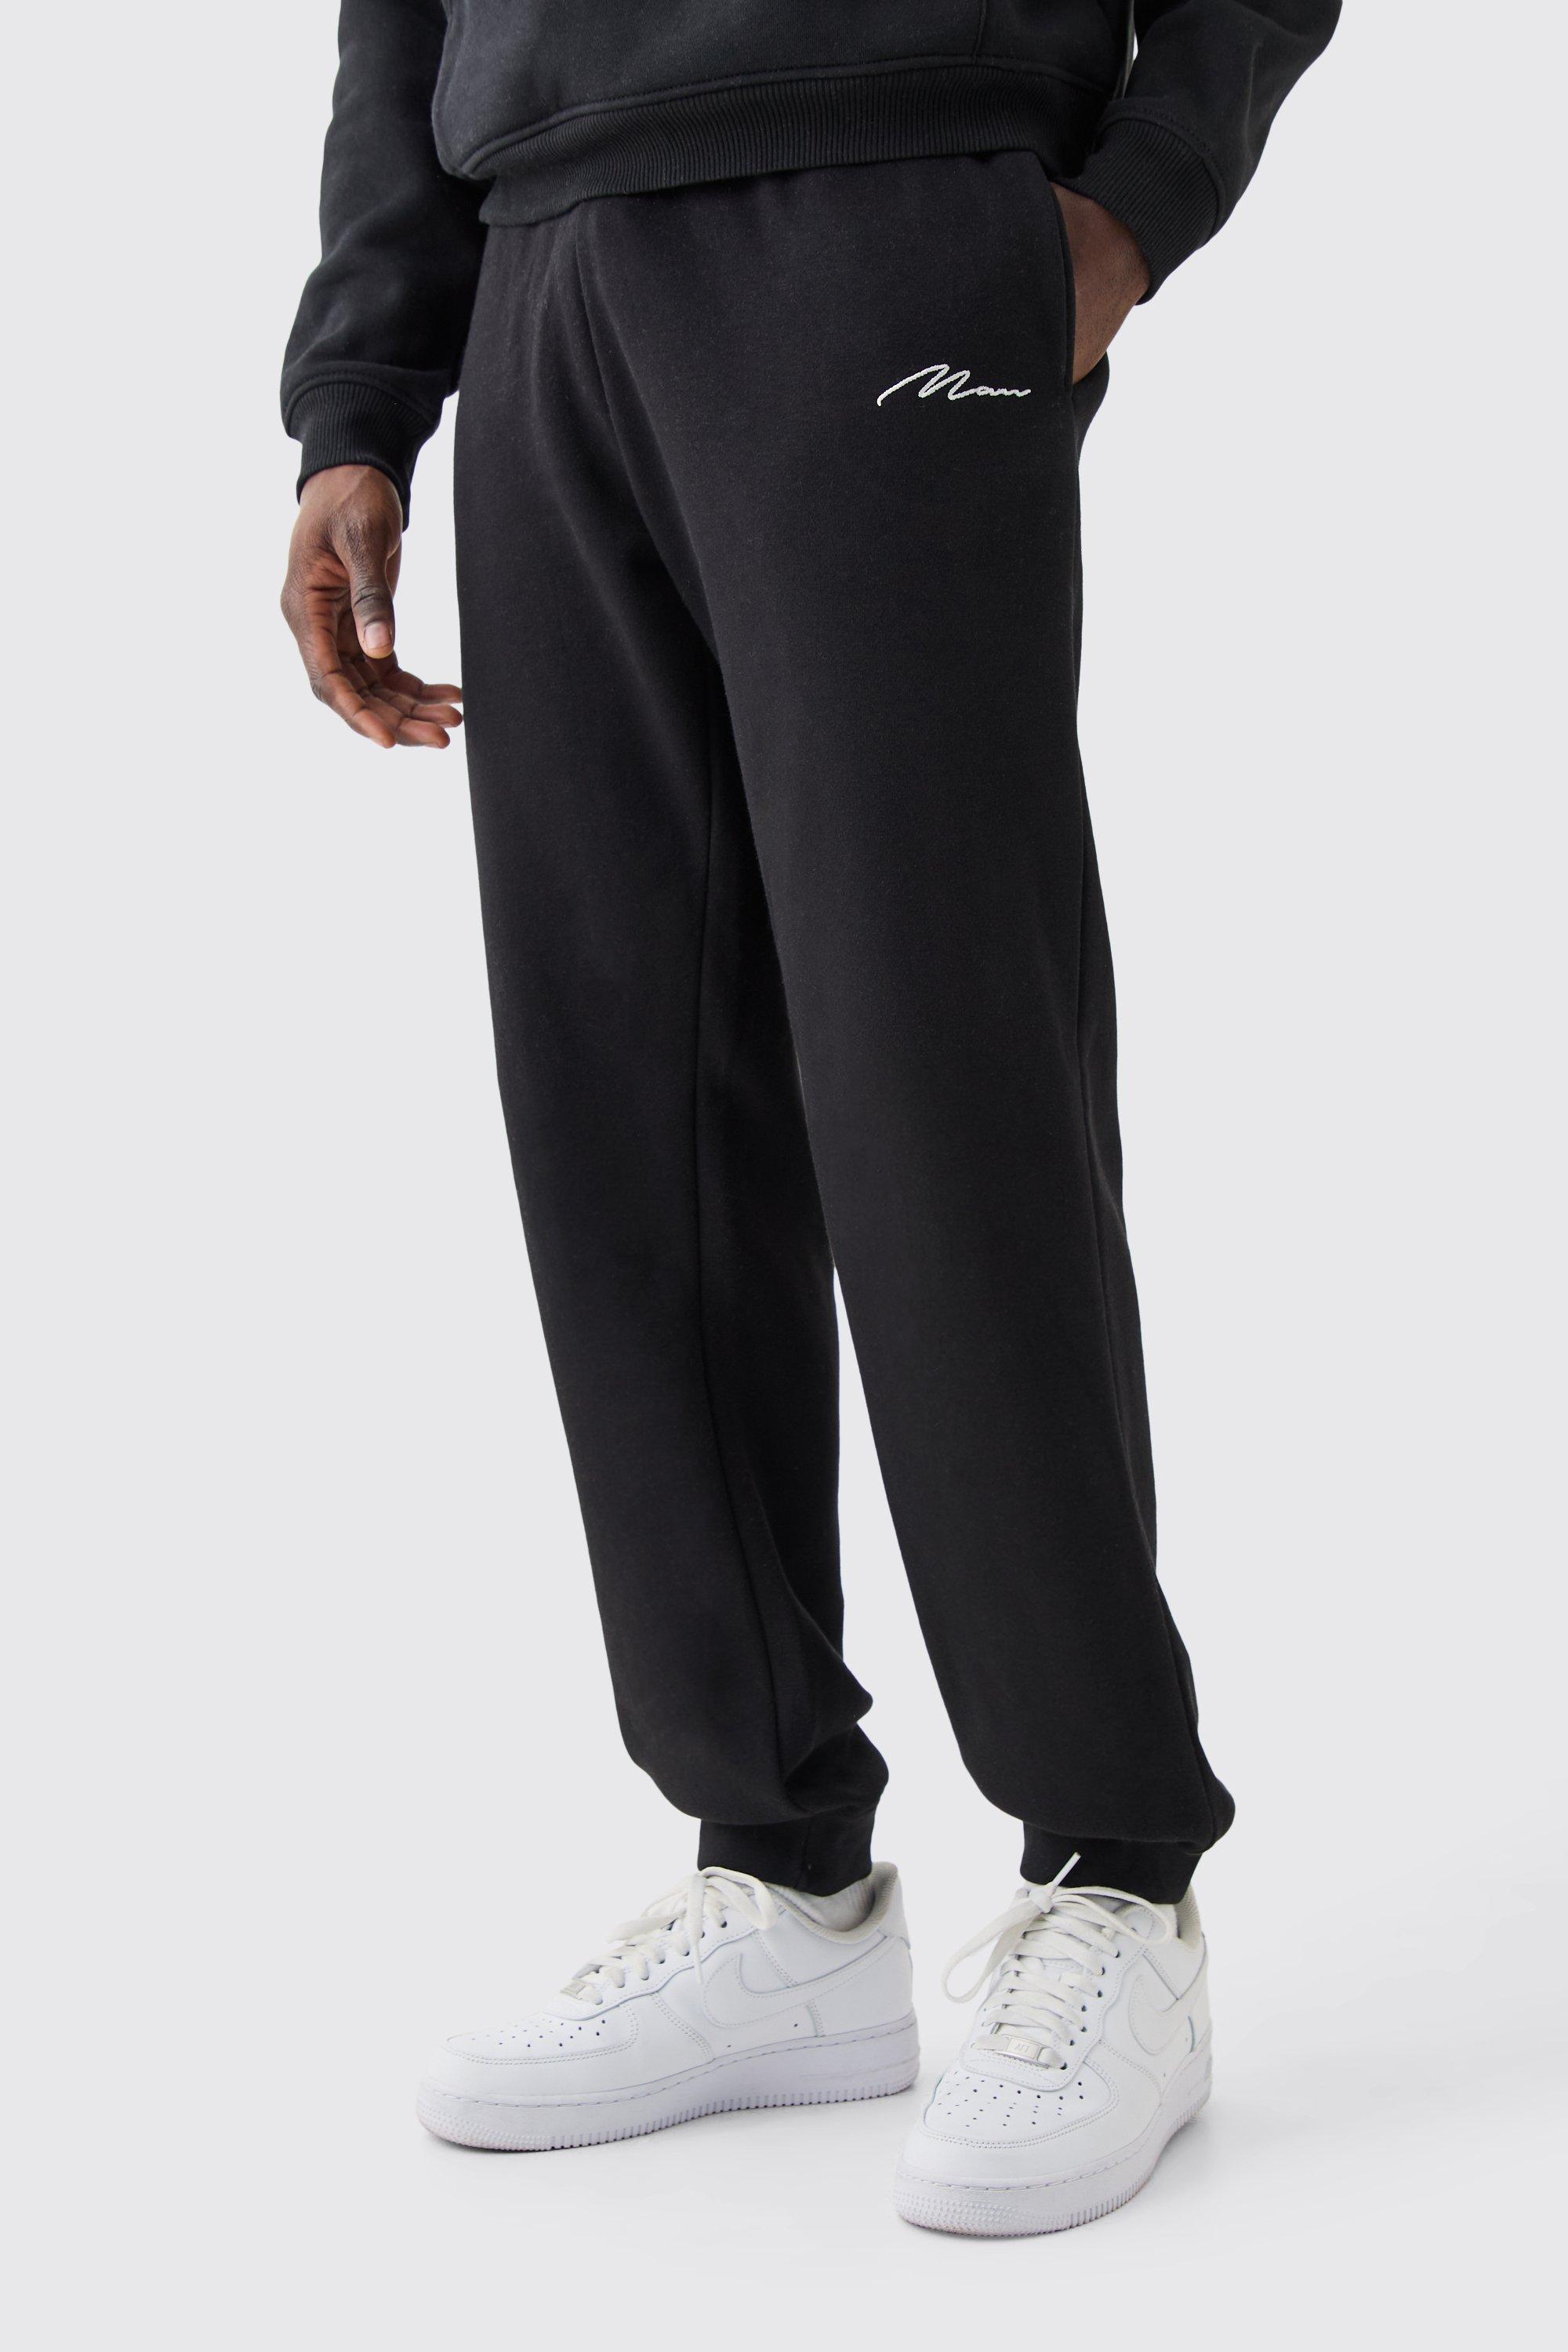 MAN Logo Joggers, MAN Branded Sweatpants